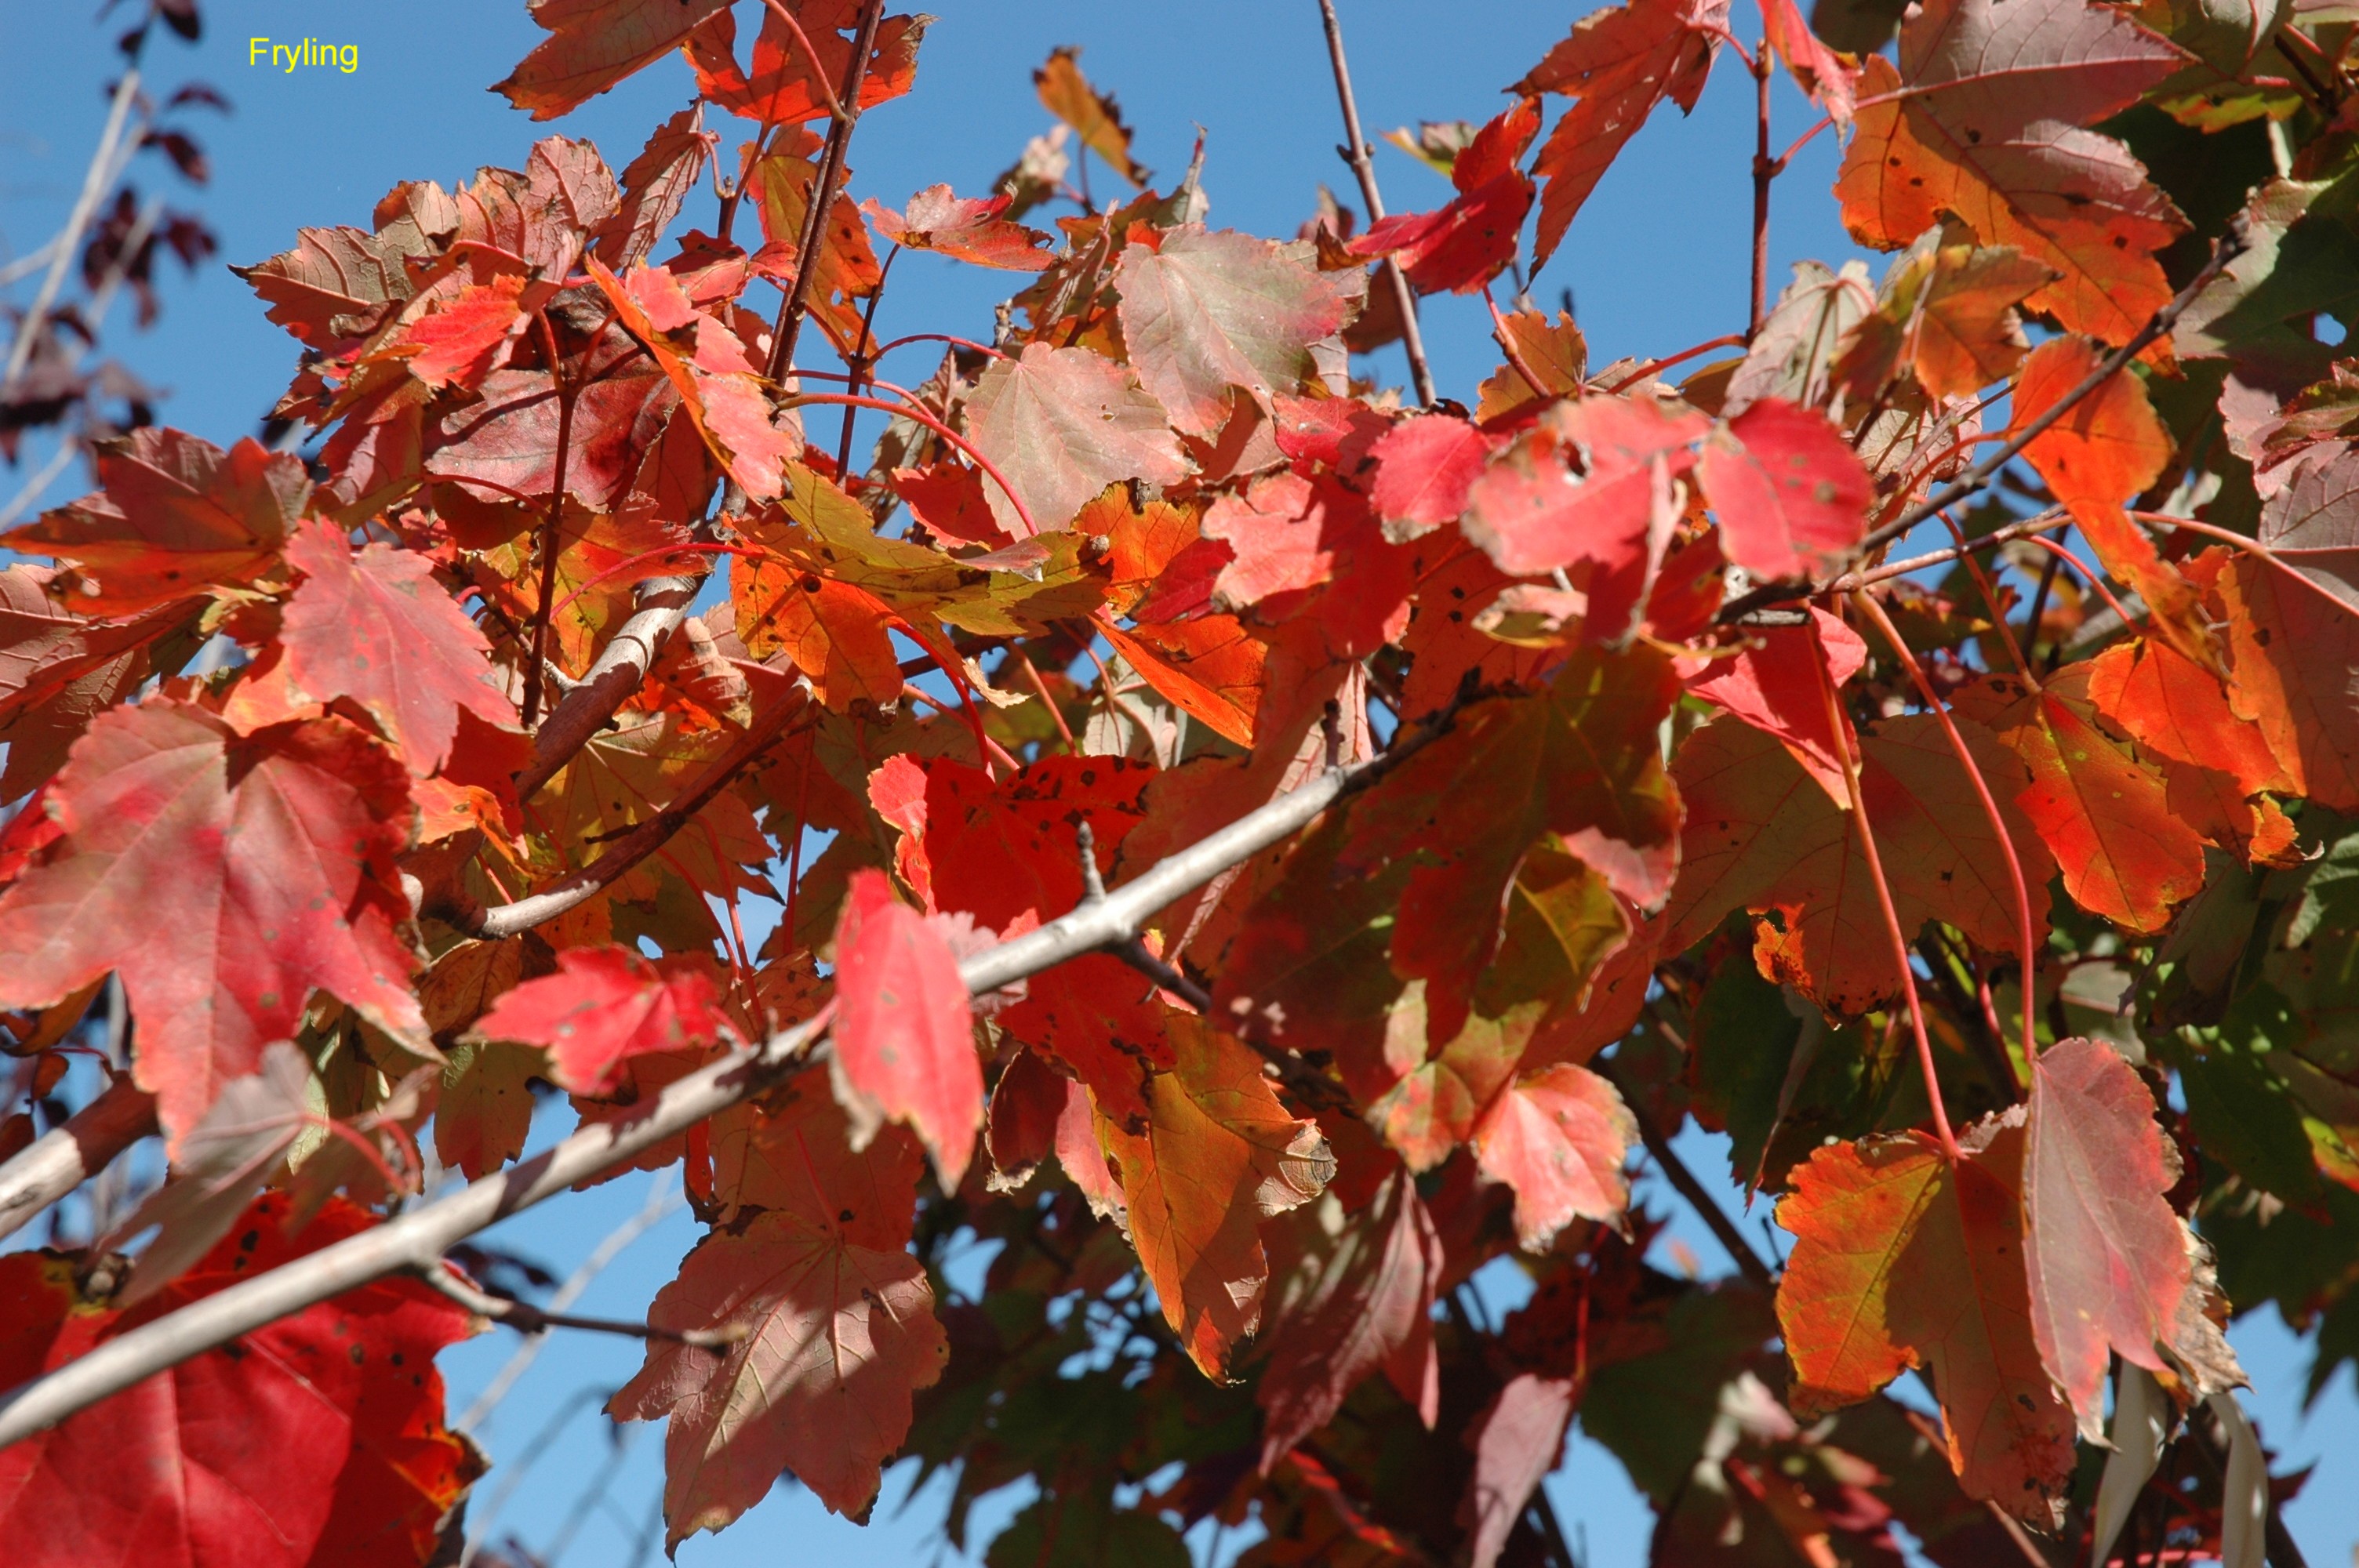 Acer rubrum 'October Glory'  / October Glory Maple